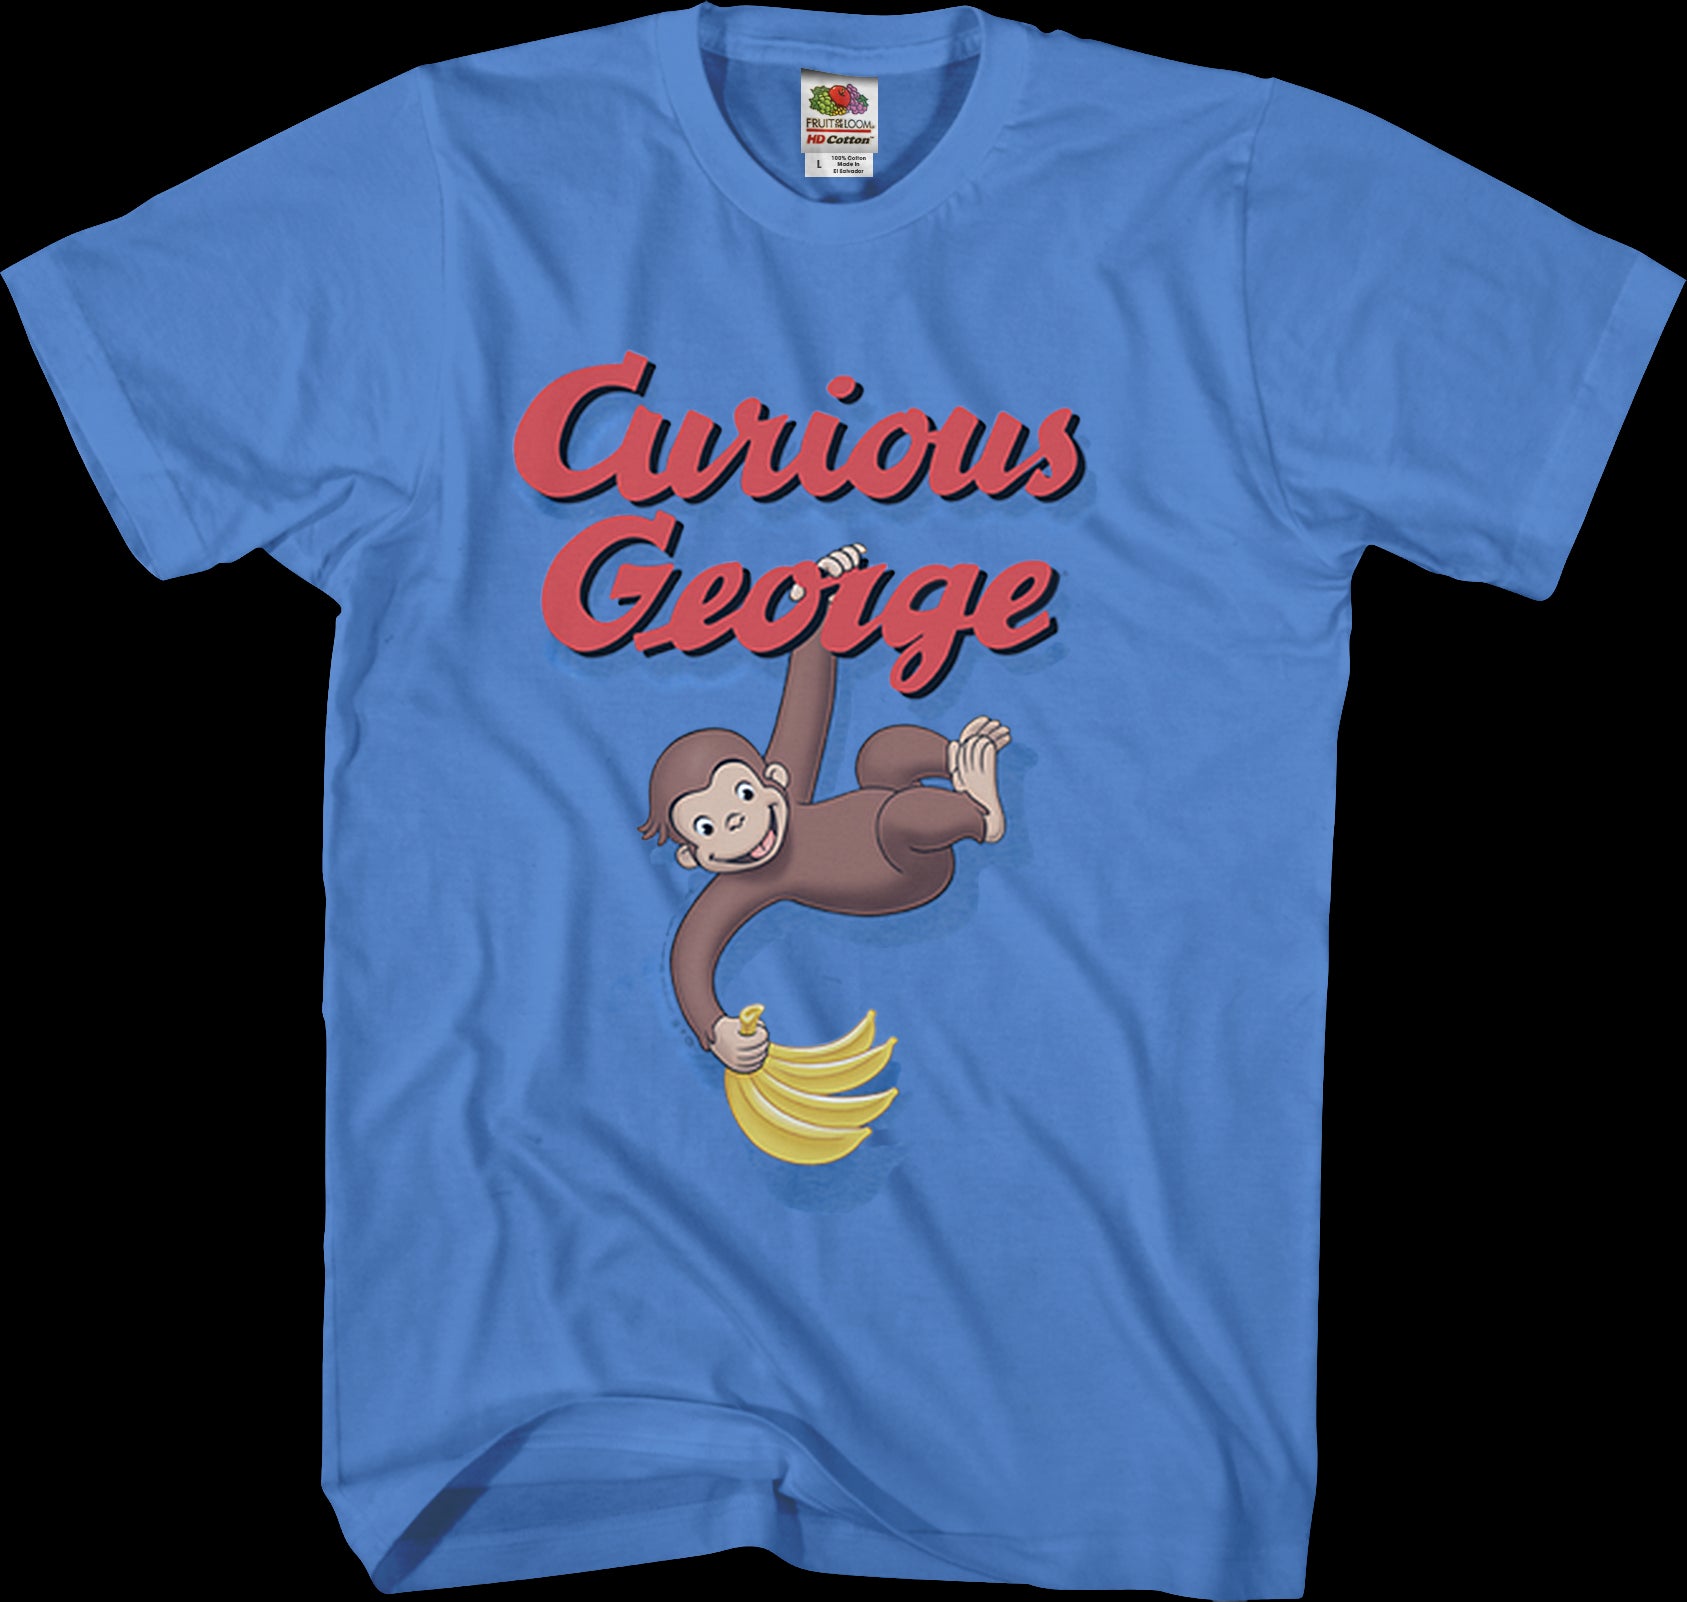 Swinging Curious George T-Shirt. Men's T-Shirt